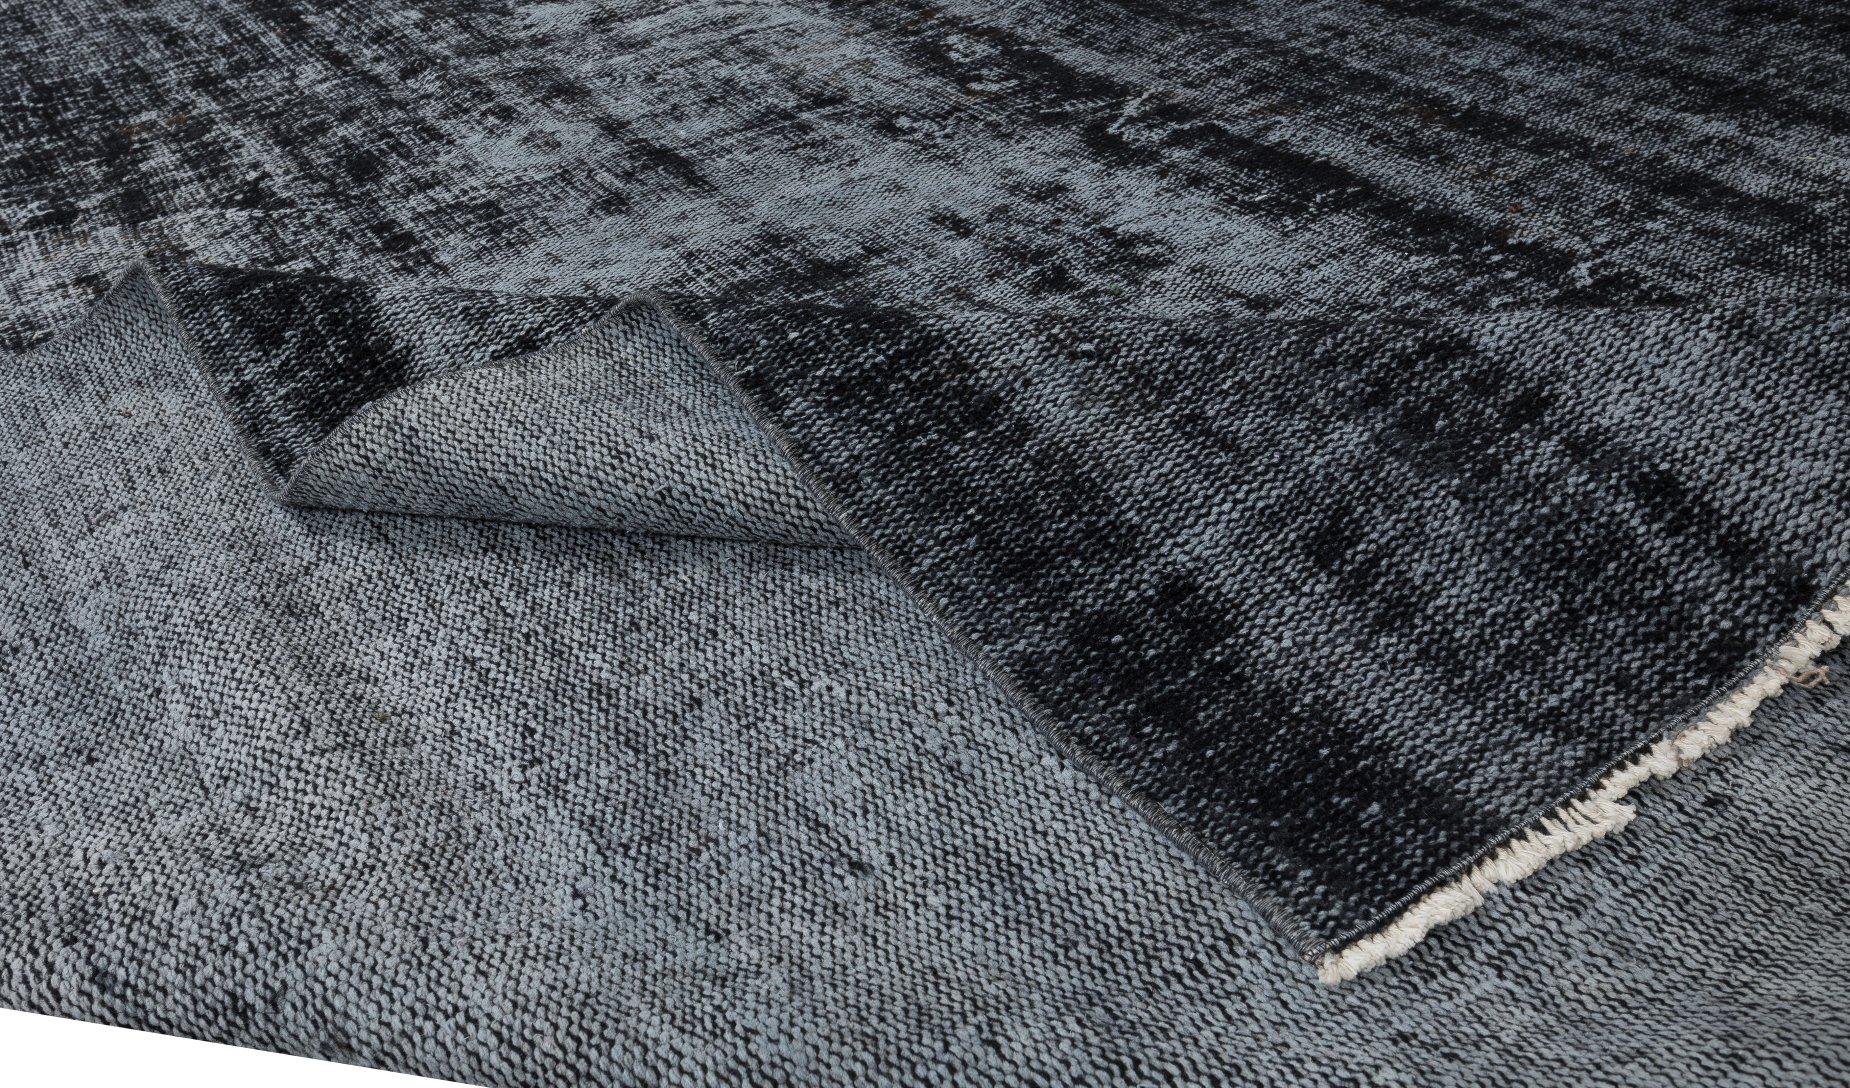 Hand-Woven 6.8x10 Ft Handmade Turkish Rug in Black for Modern Homes. Vintage Wool Carpet For Sale